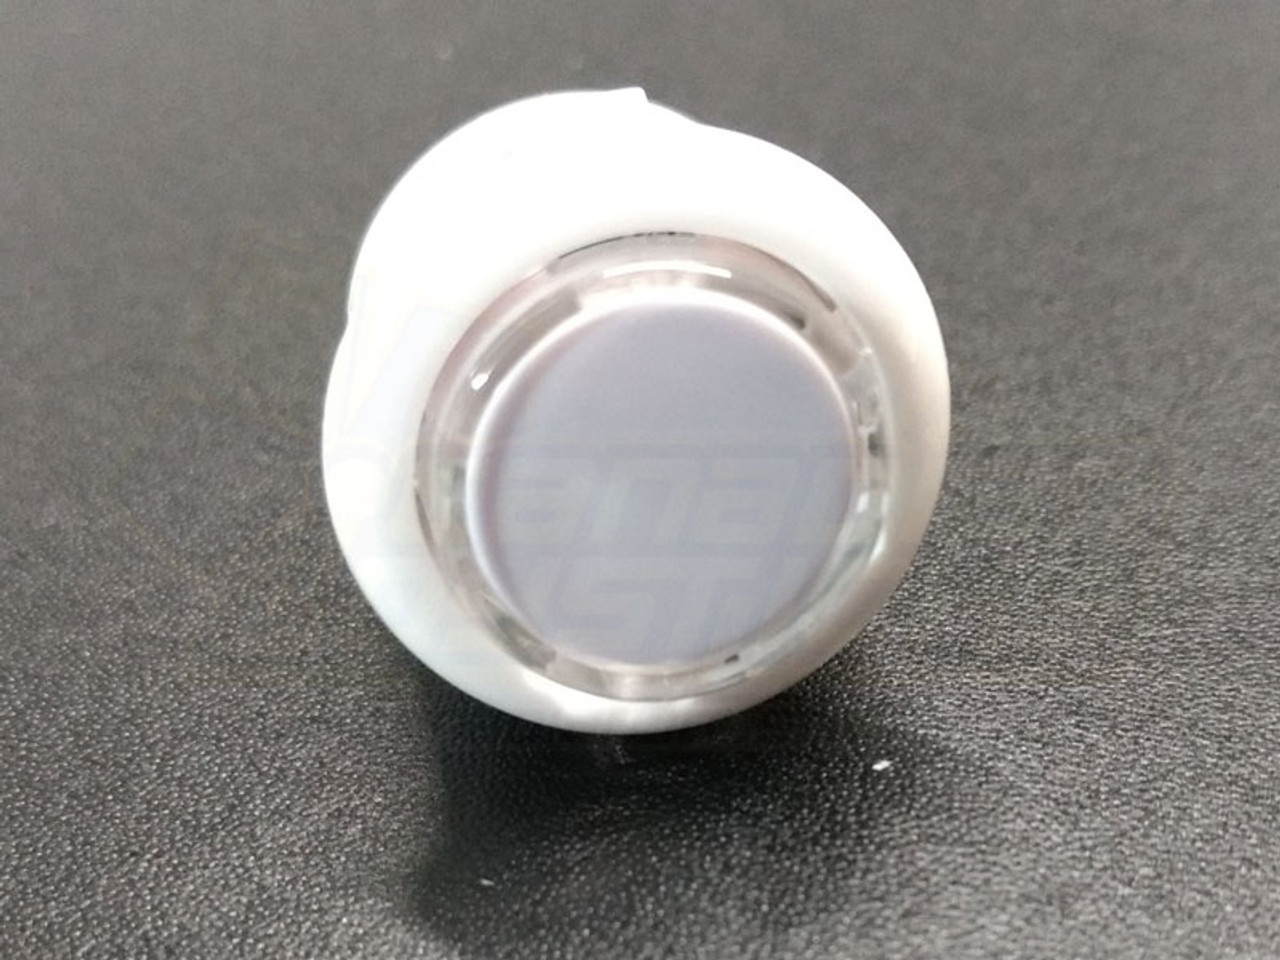 Qanba 24mm LED Button - White Body White LED - Canadian Joysticks